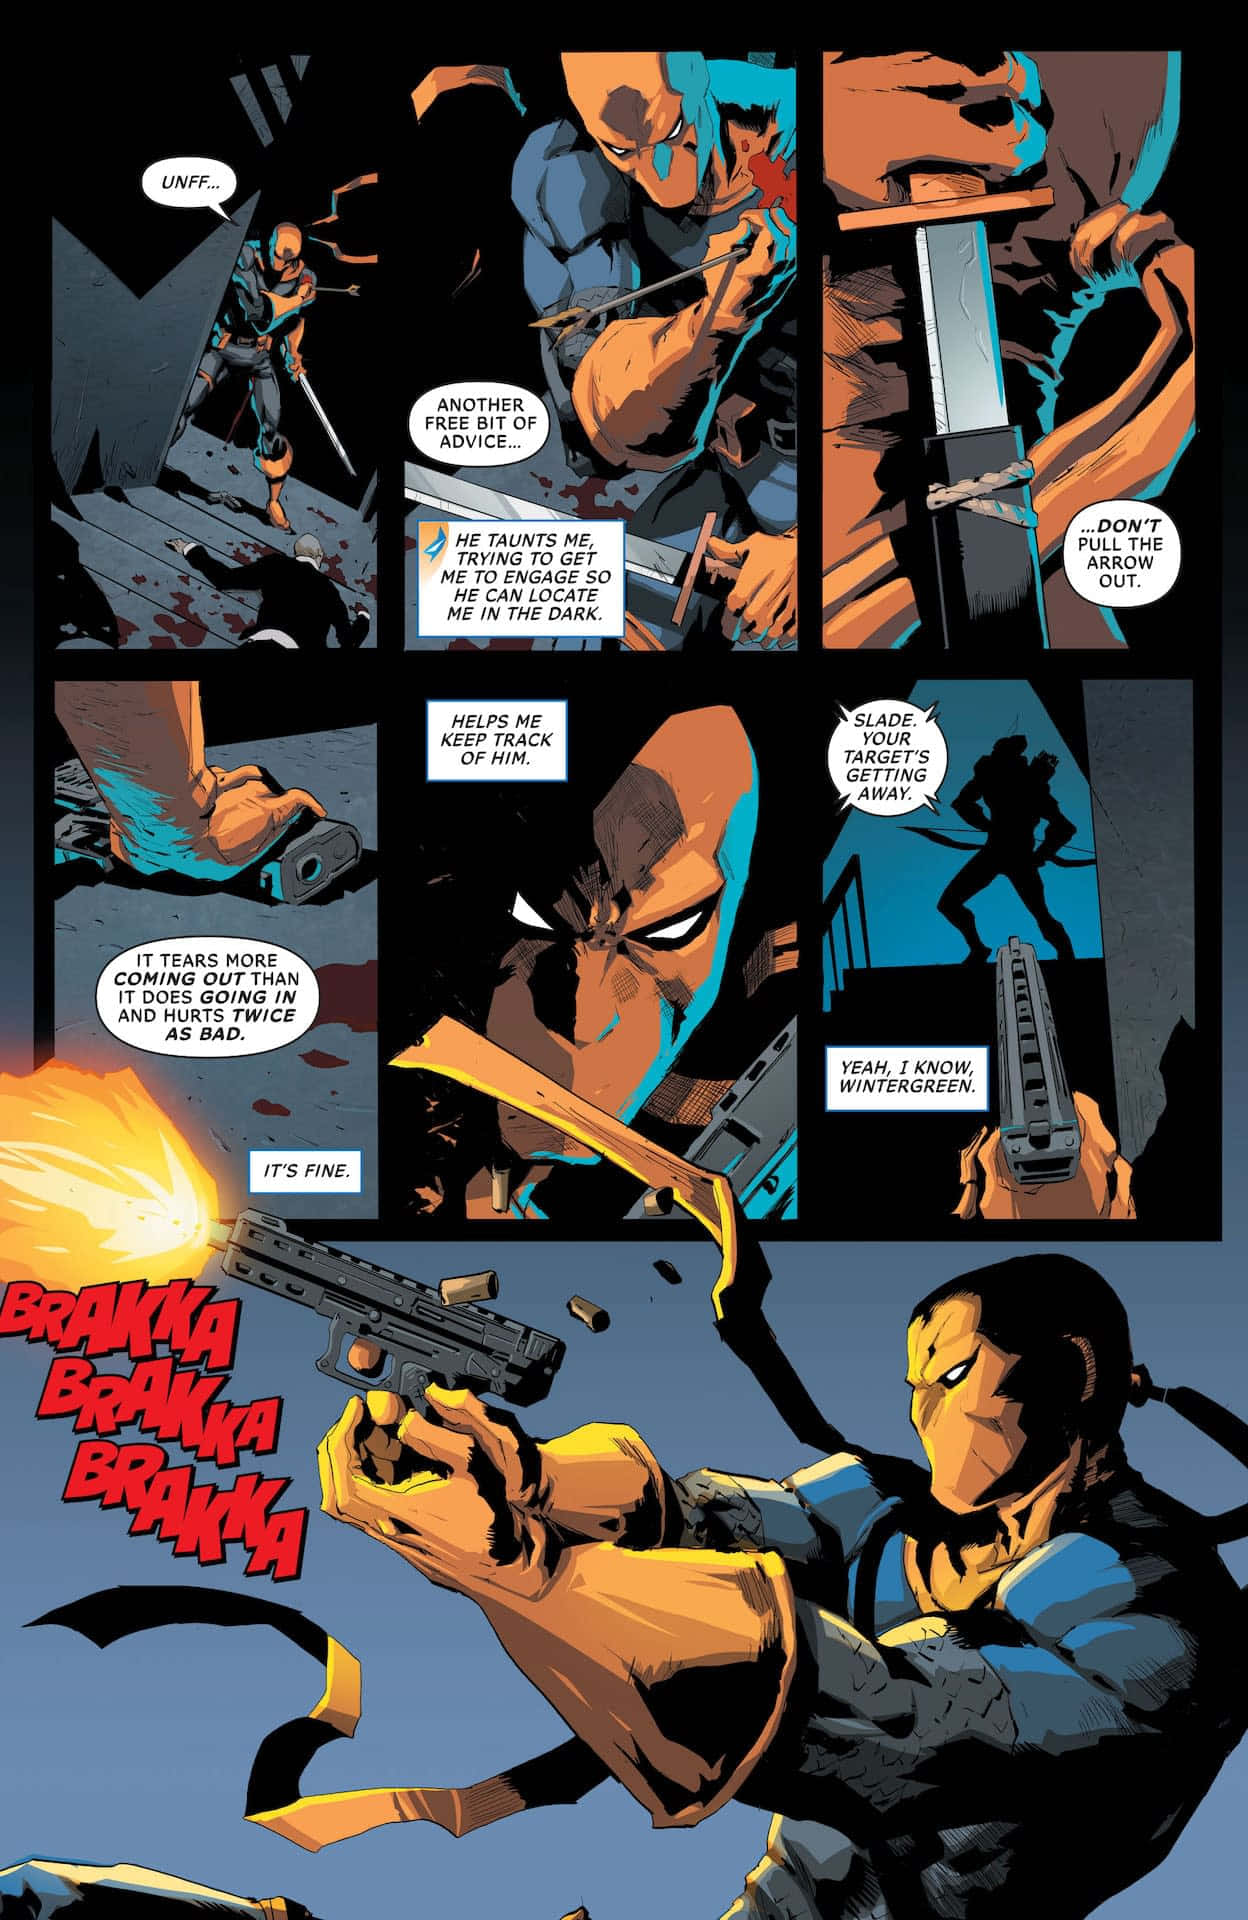 Deathstroke, the DC Universe's Ultimate Mercenary